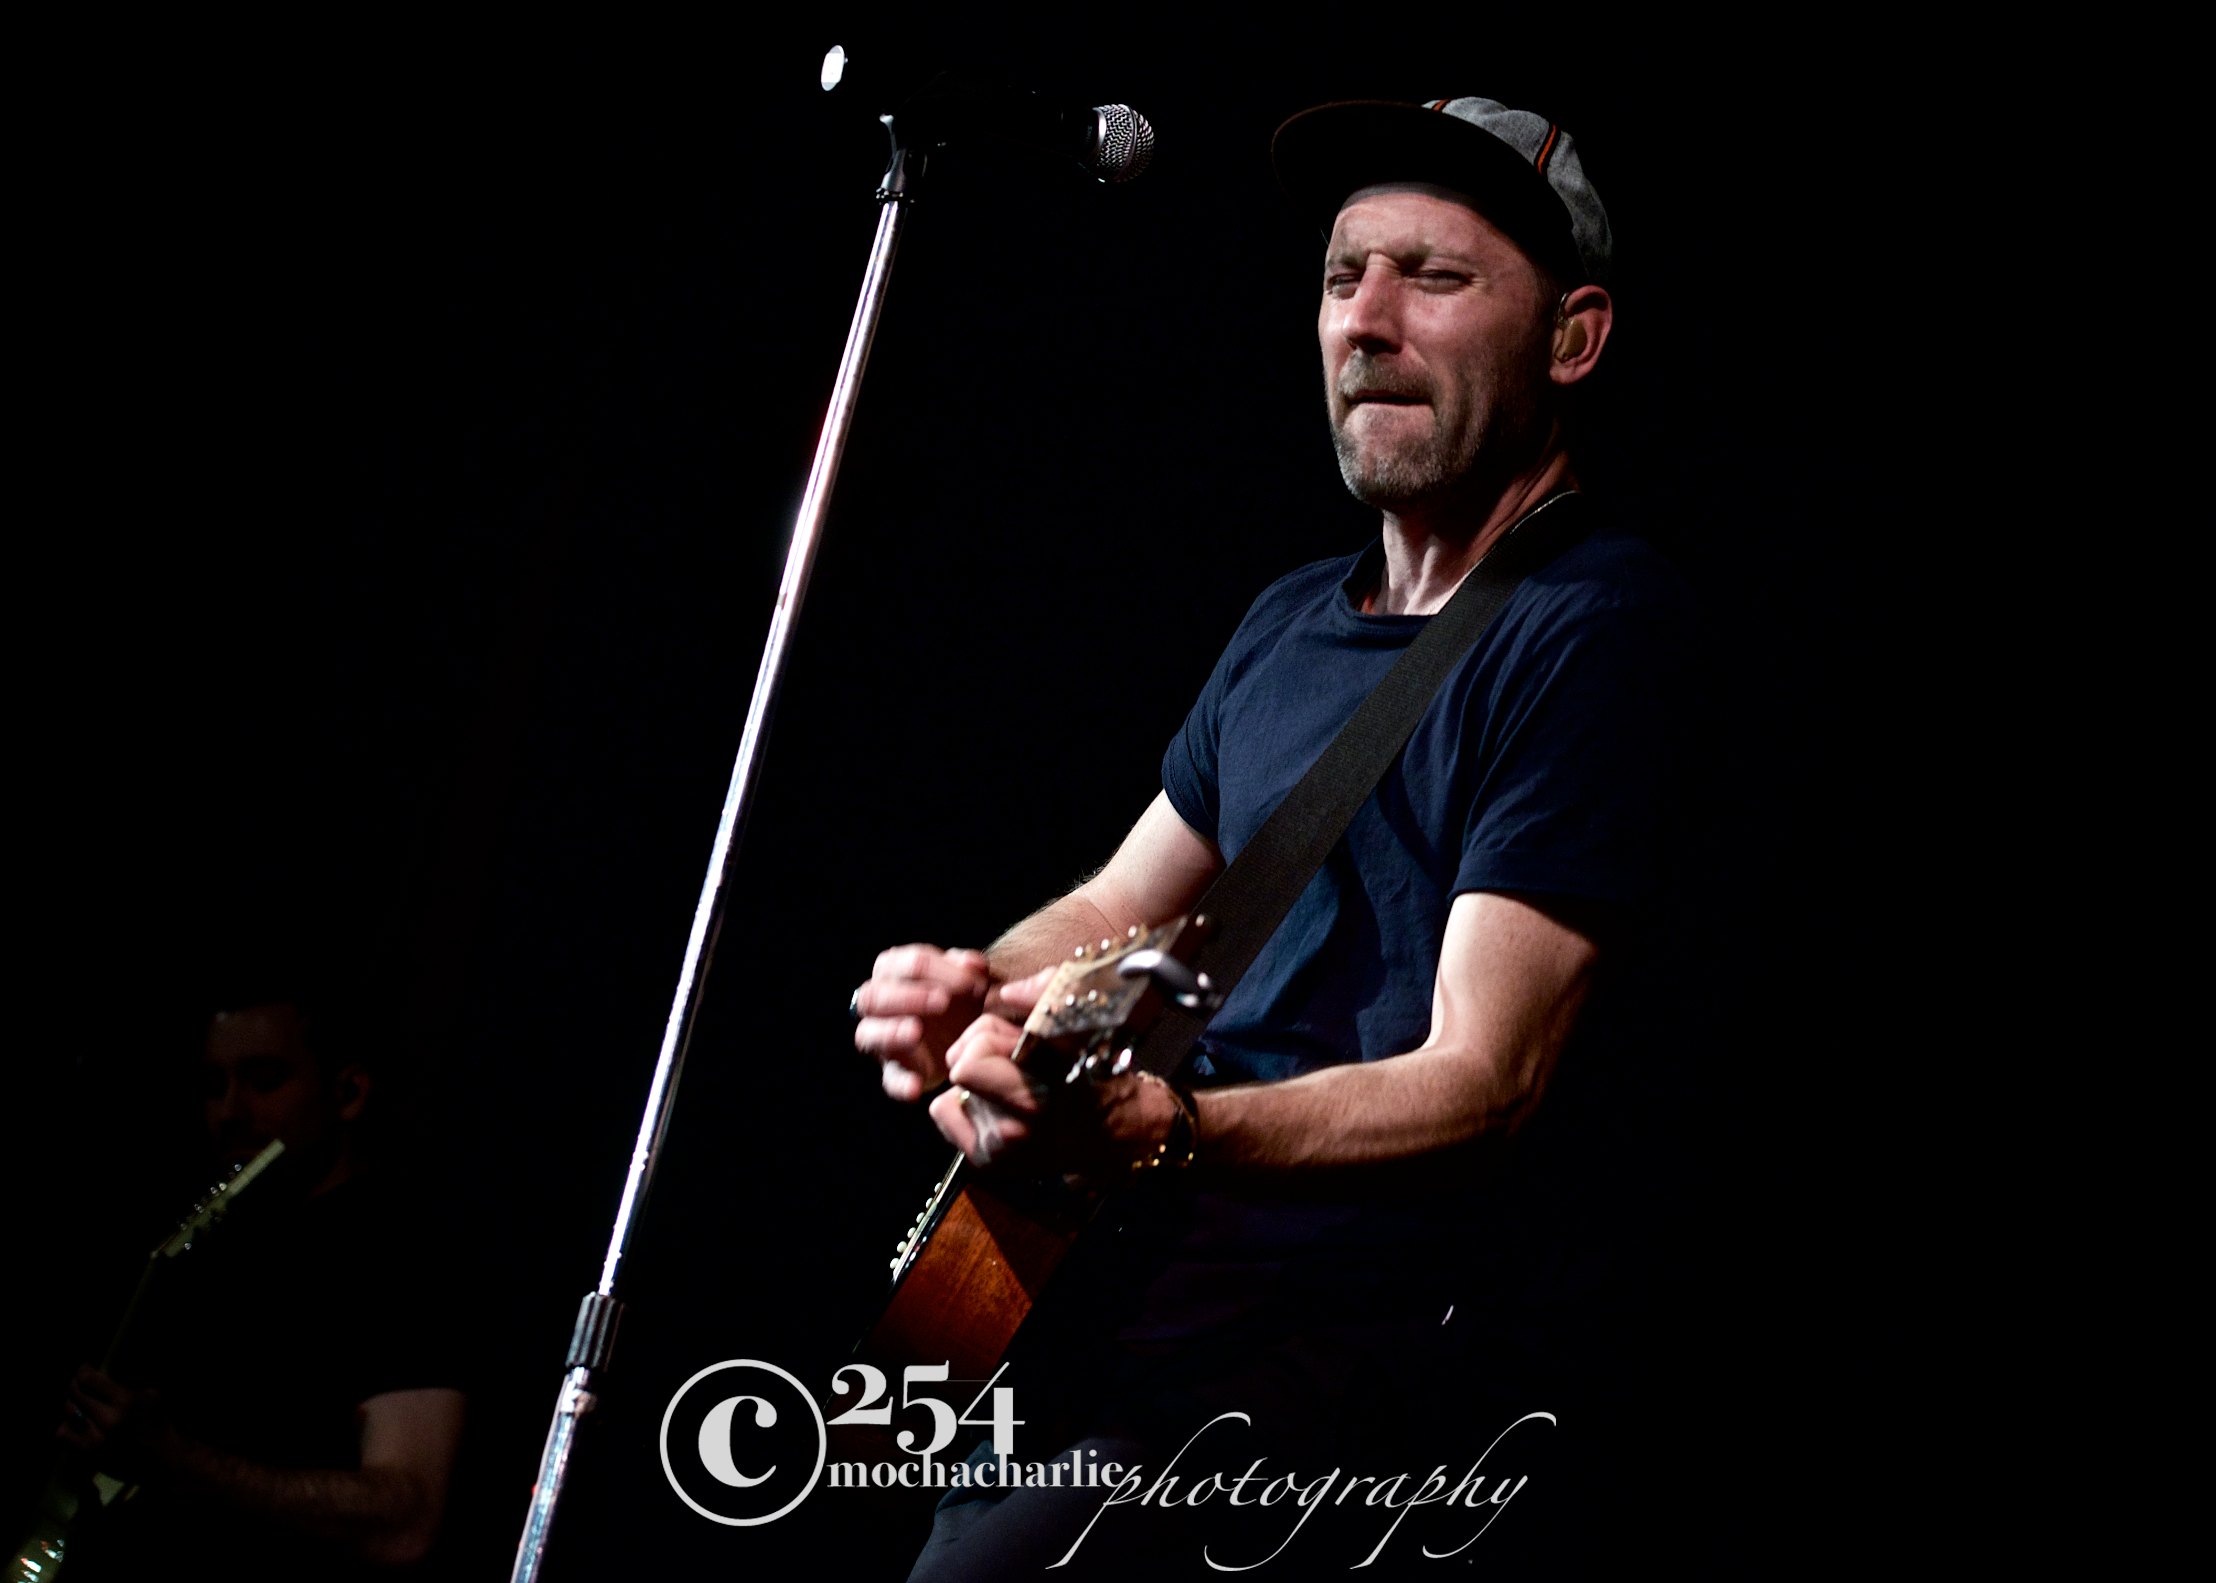 Mat Kearney Live at Green River CC (Photo by Mocha Charlie)